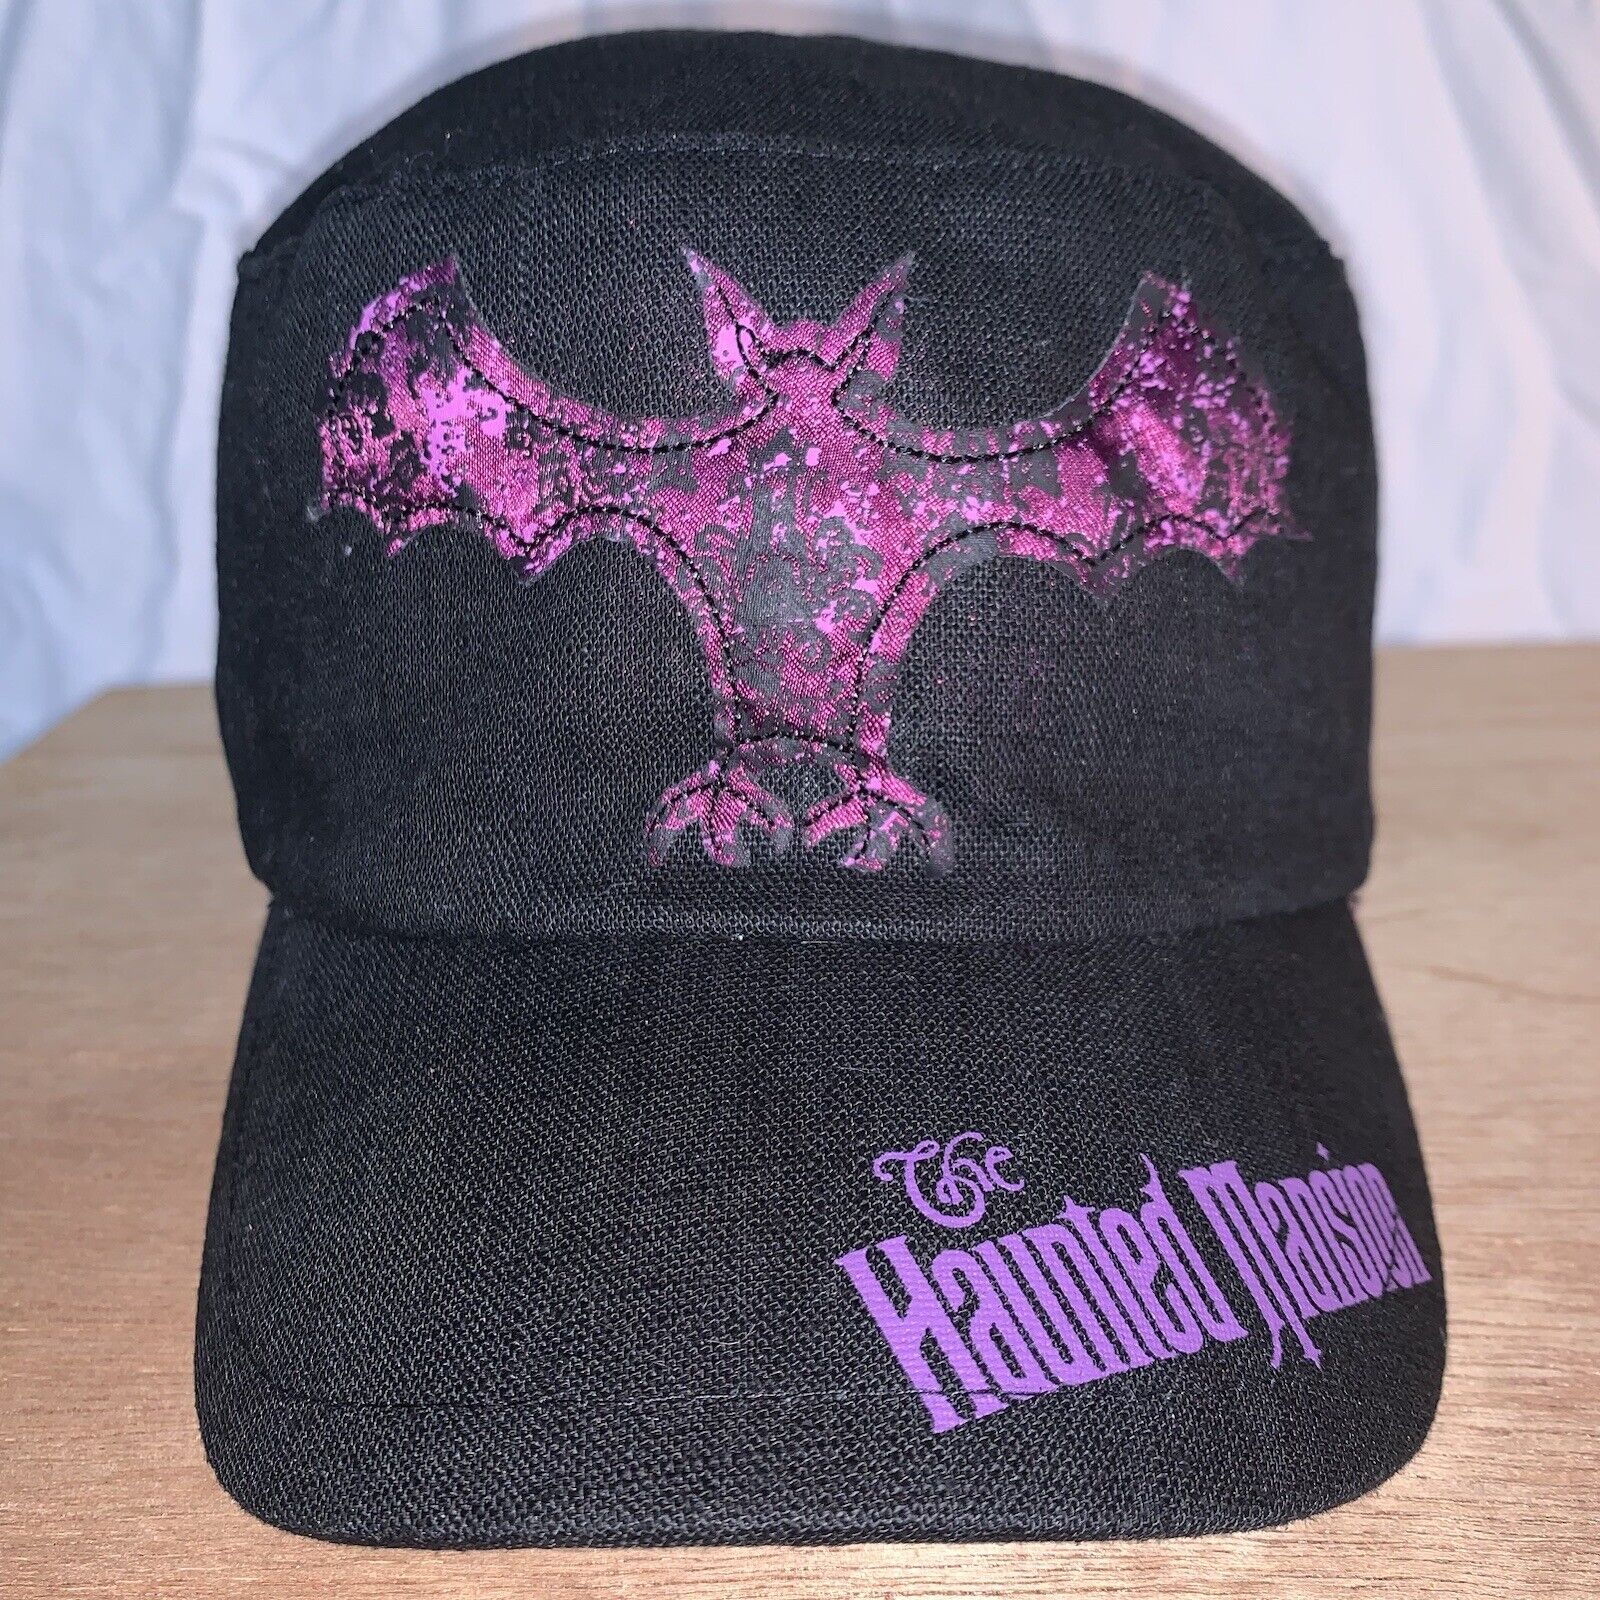 Disney Parks Haunted Mansion “Bat” Logo Fitted Hat. Purple Satin On Inside. $25.